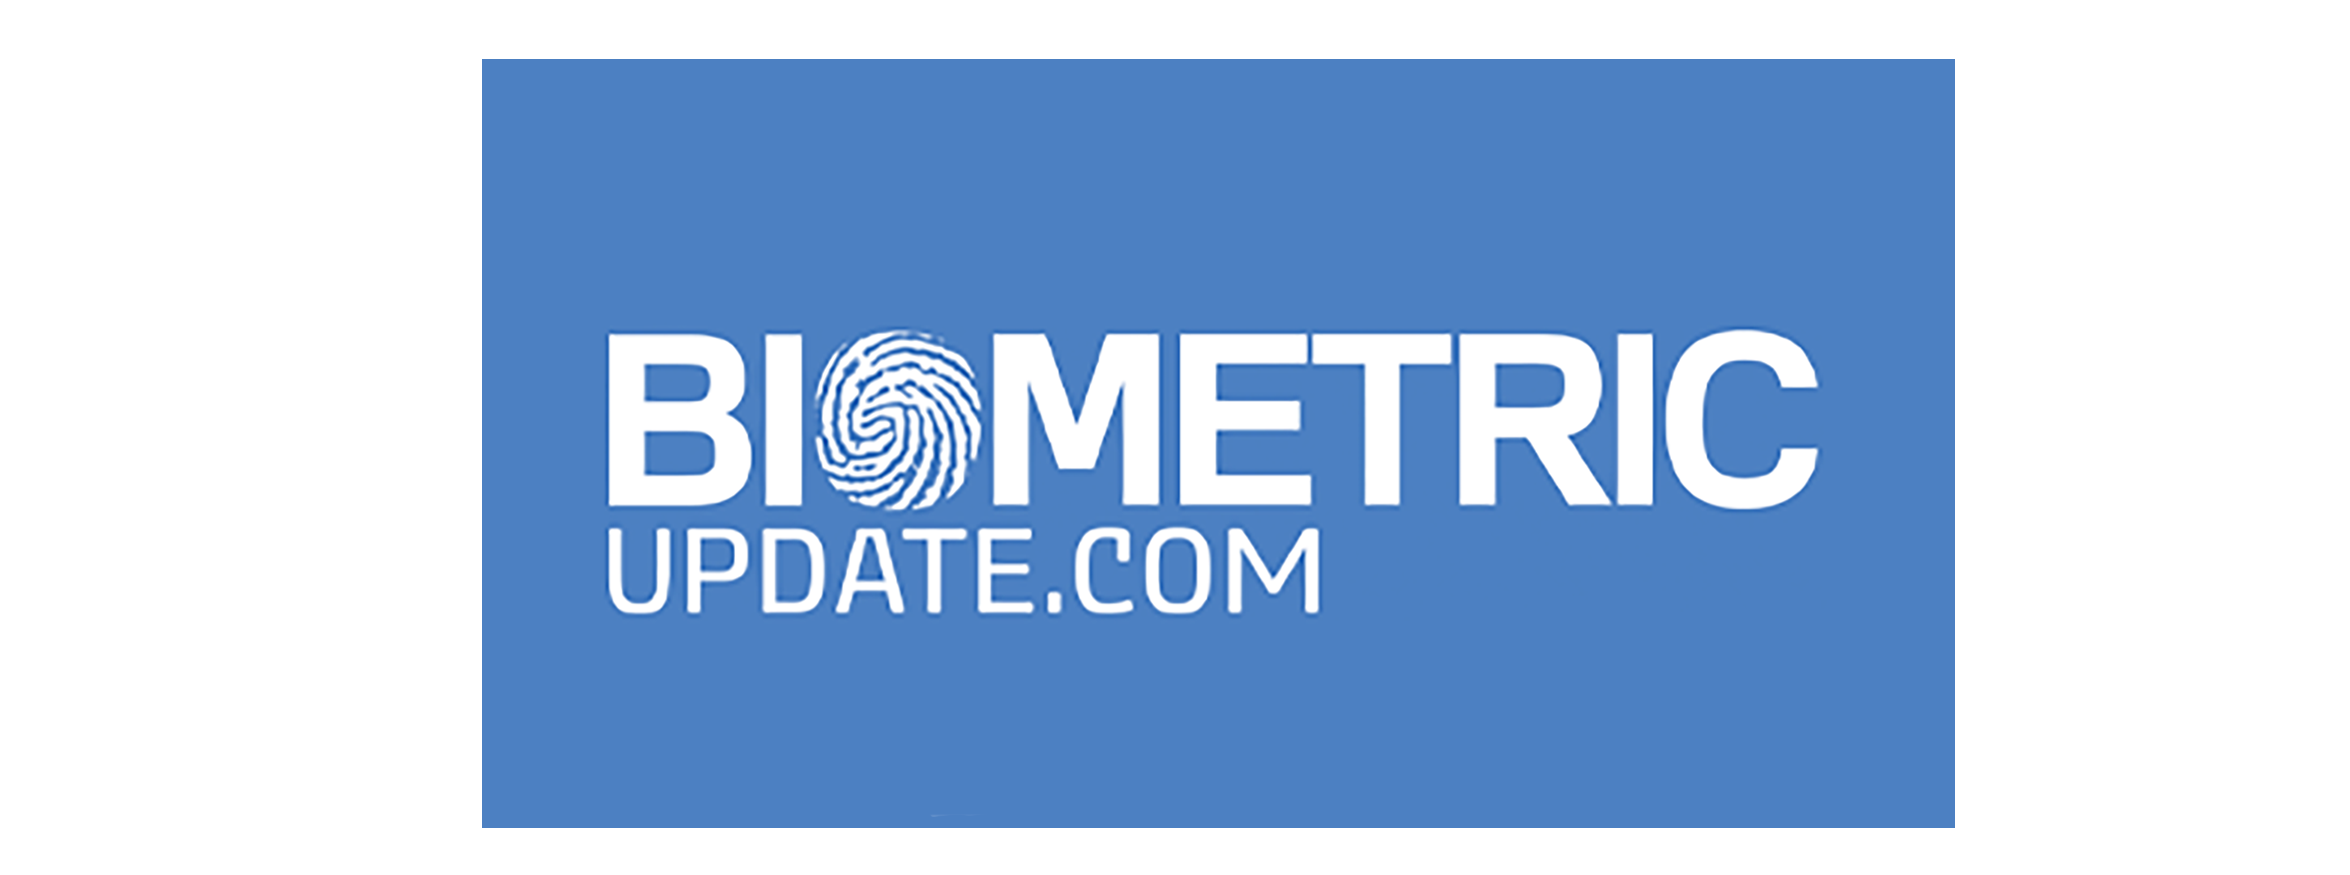 biometric update logo